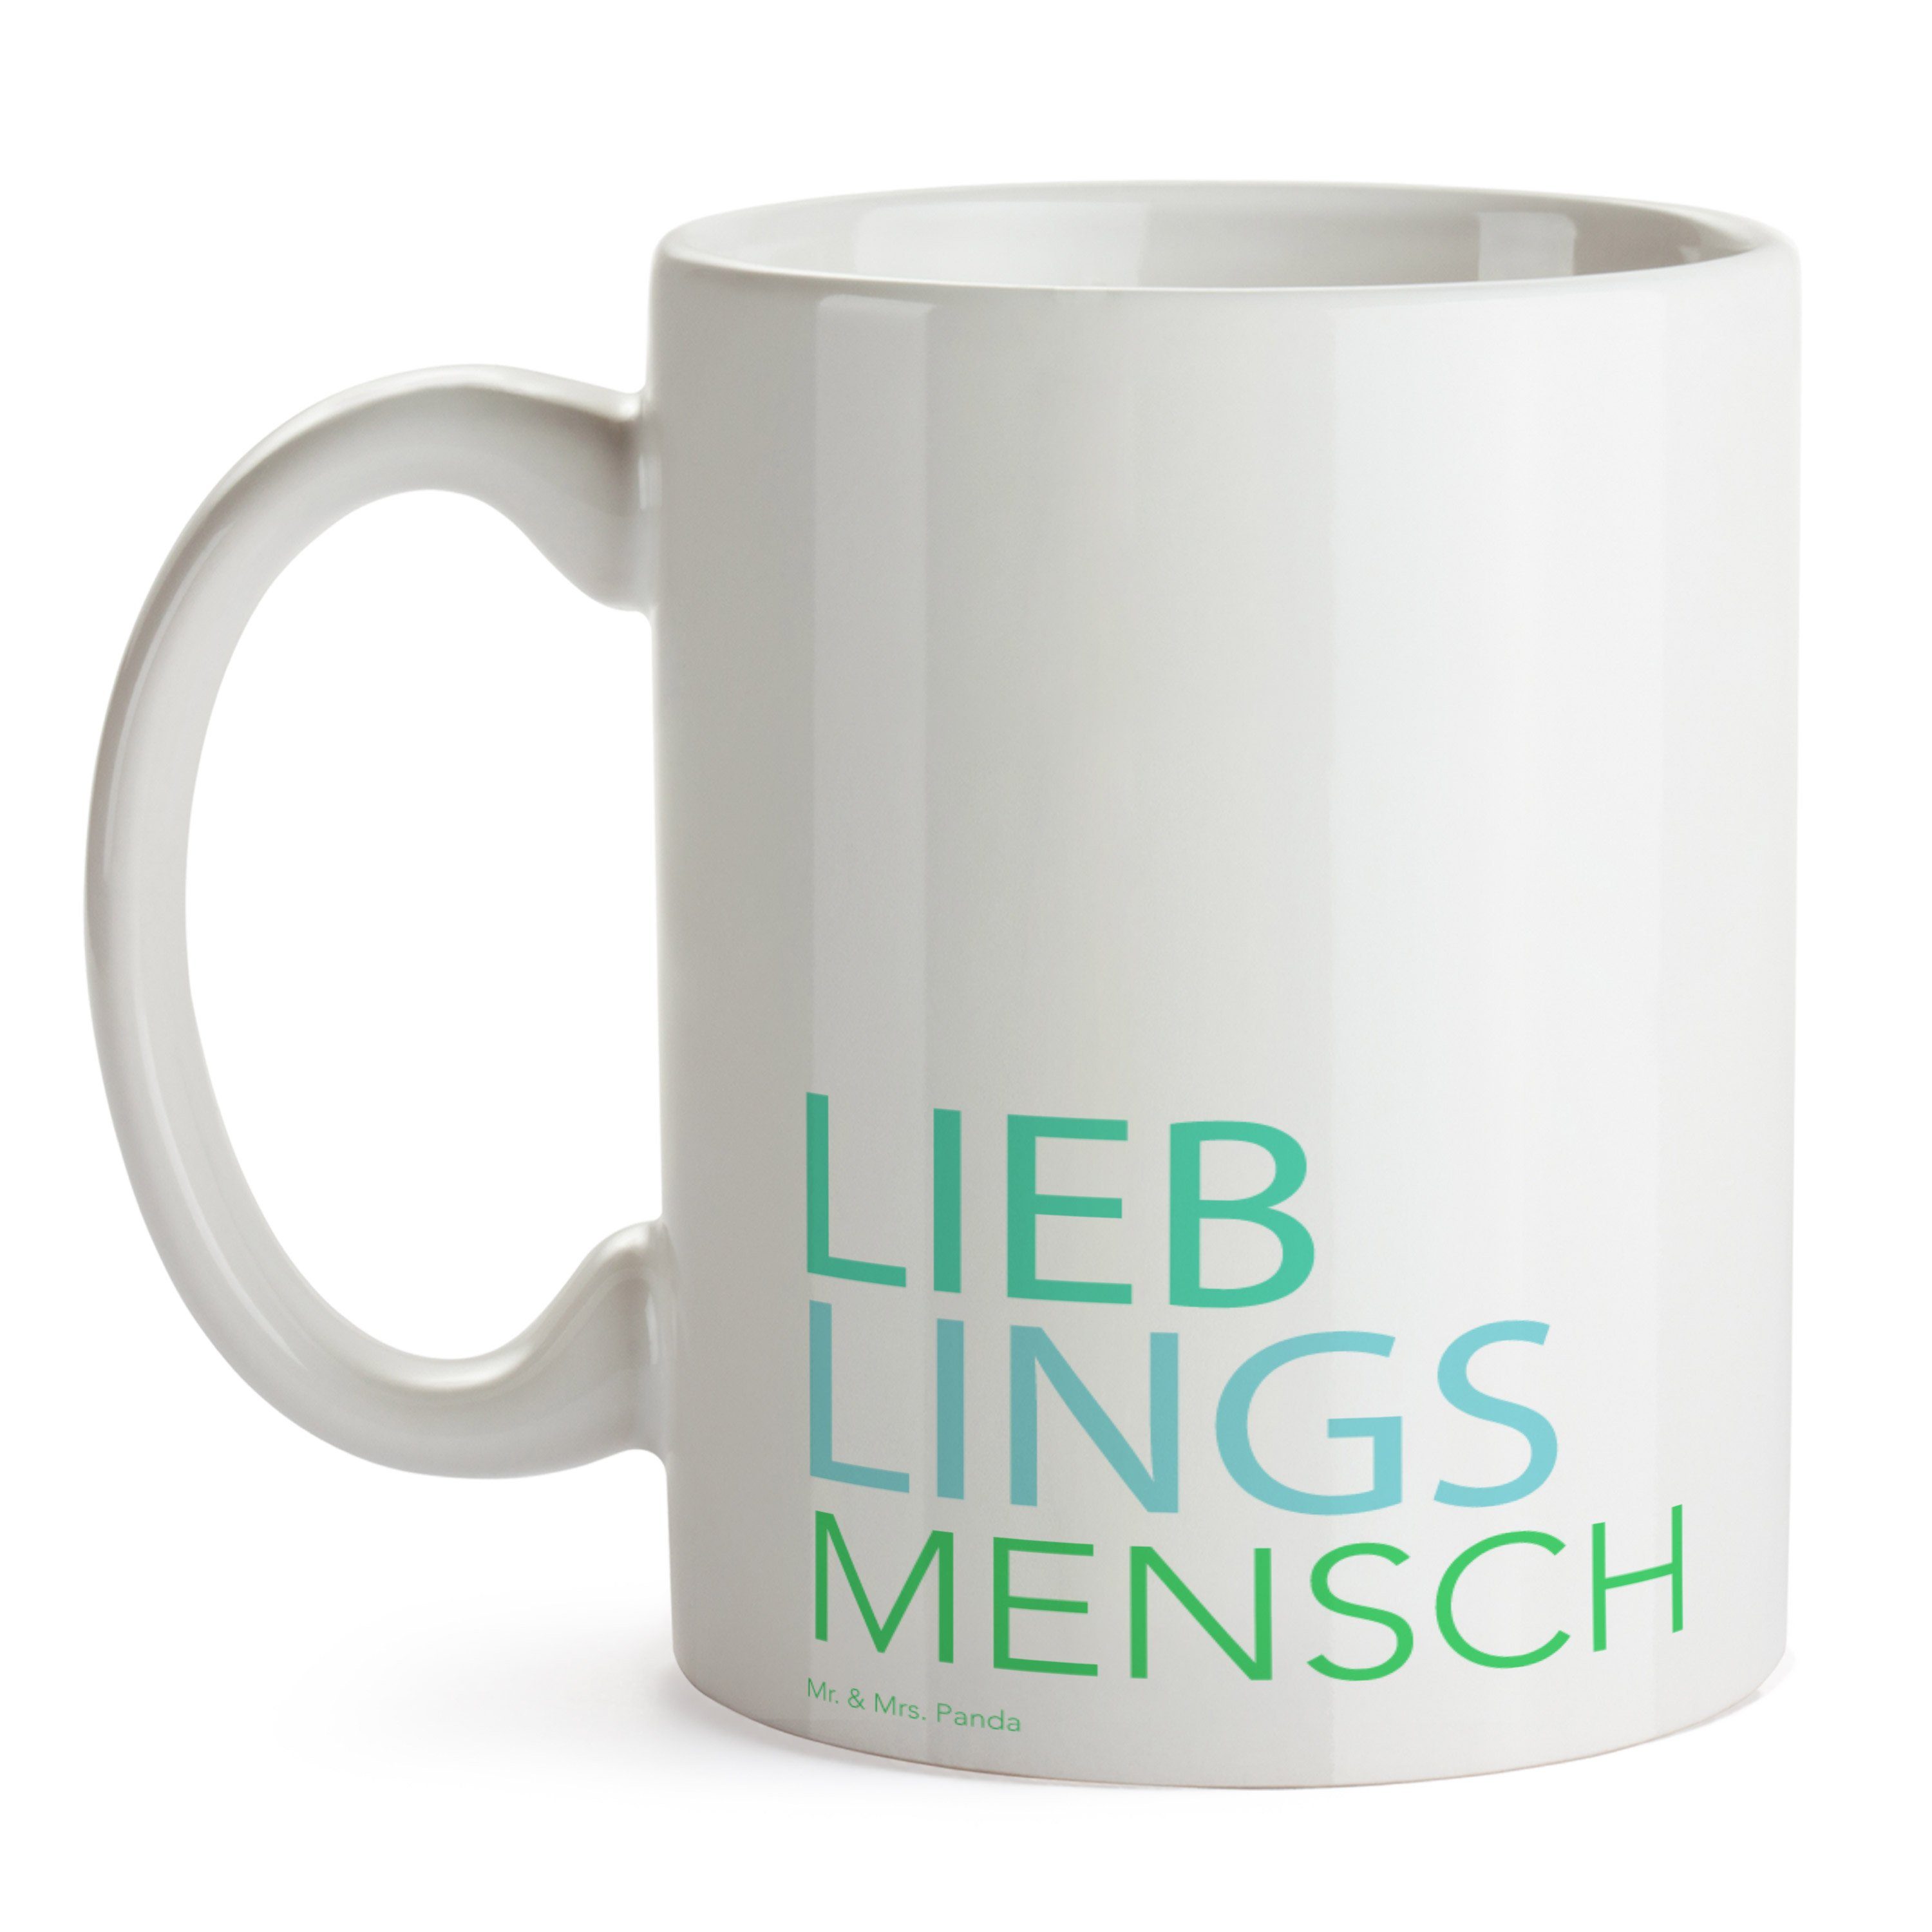 Lieblings - Panda Weiß & Mensch, Keramik Teetasse, Mrs. Mr. Spruch, Mensch Geschenk, Liebe, Tasse -